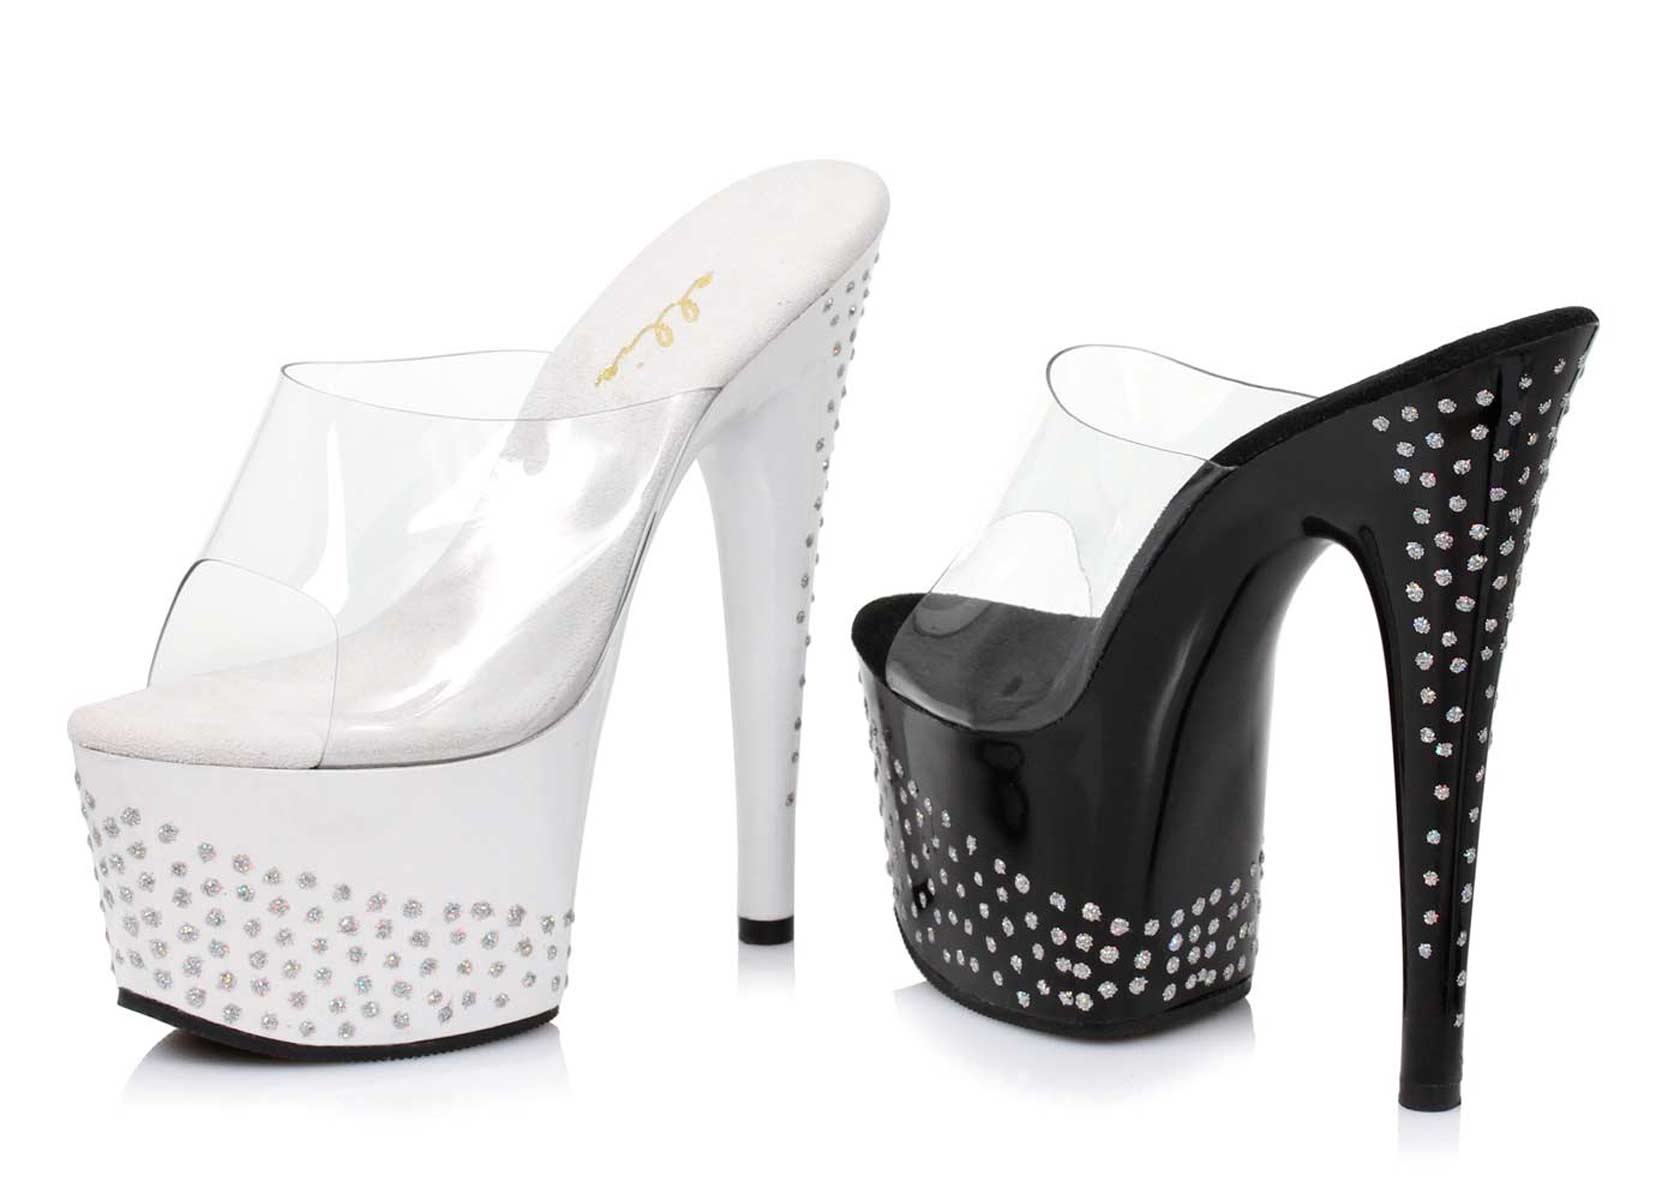 Ellie Shoes 709-SANDY - Black Patent in Sexy Heels & Platforms - $37.79